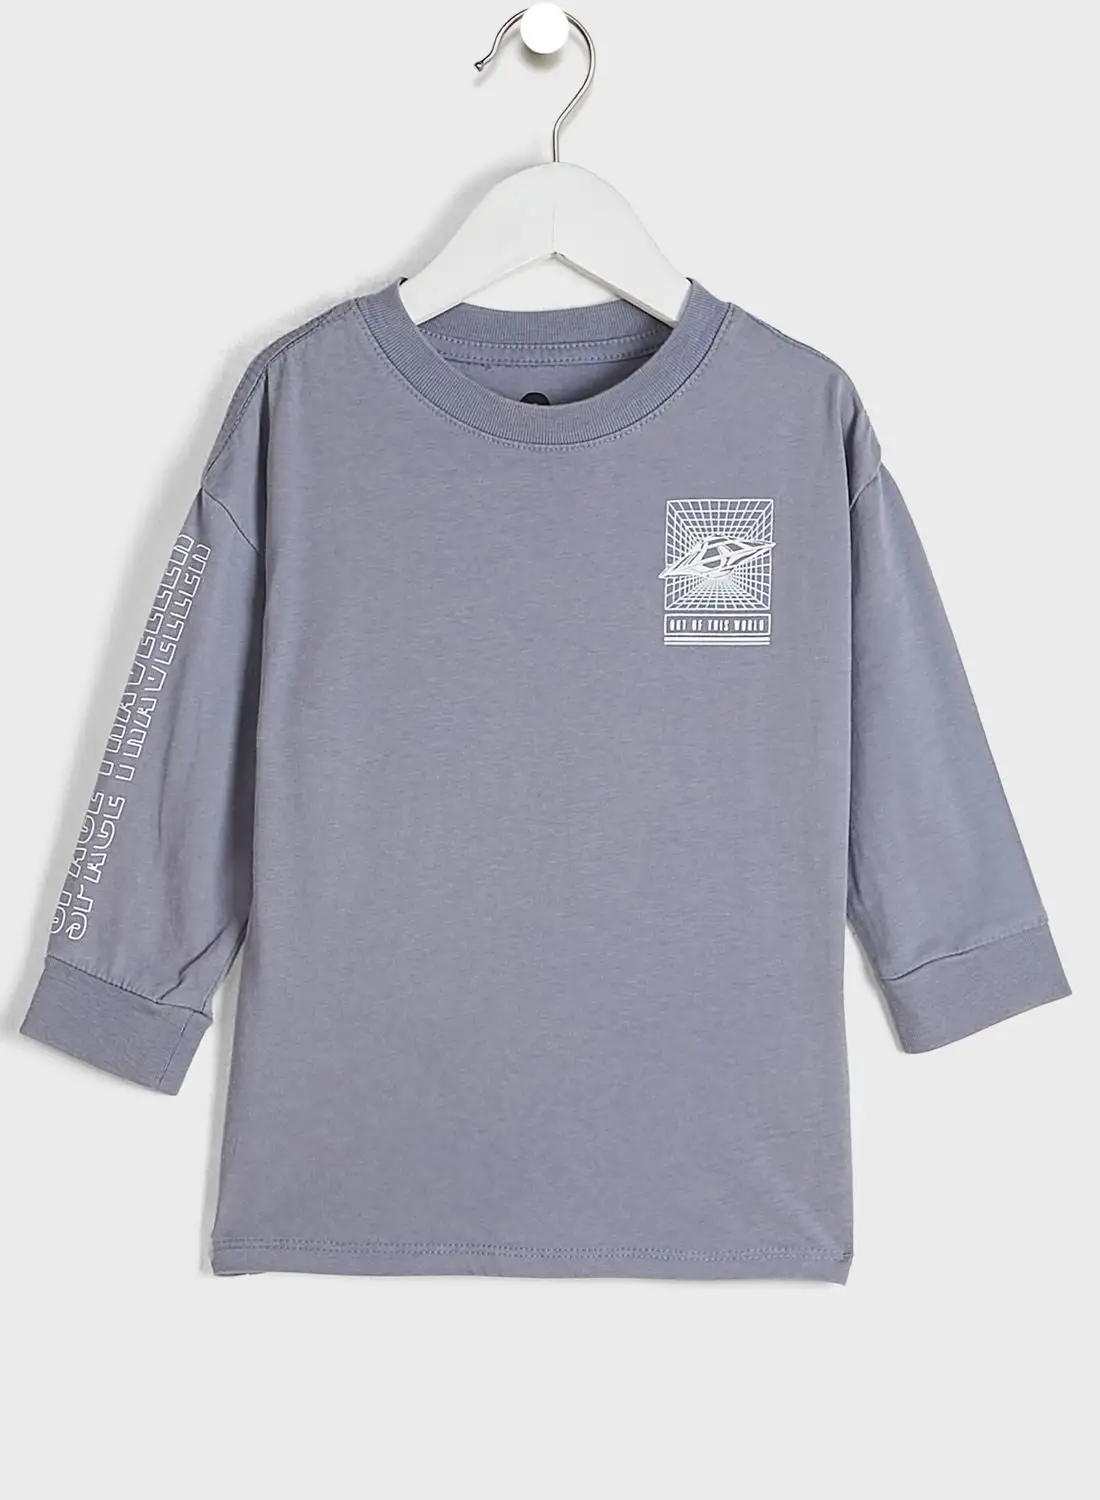 Cotton On Kids Graphic T-Shirt